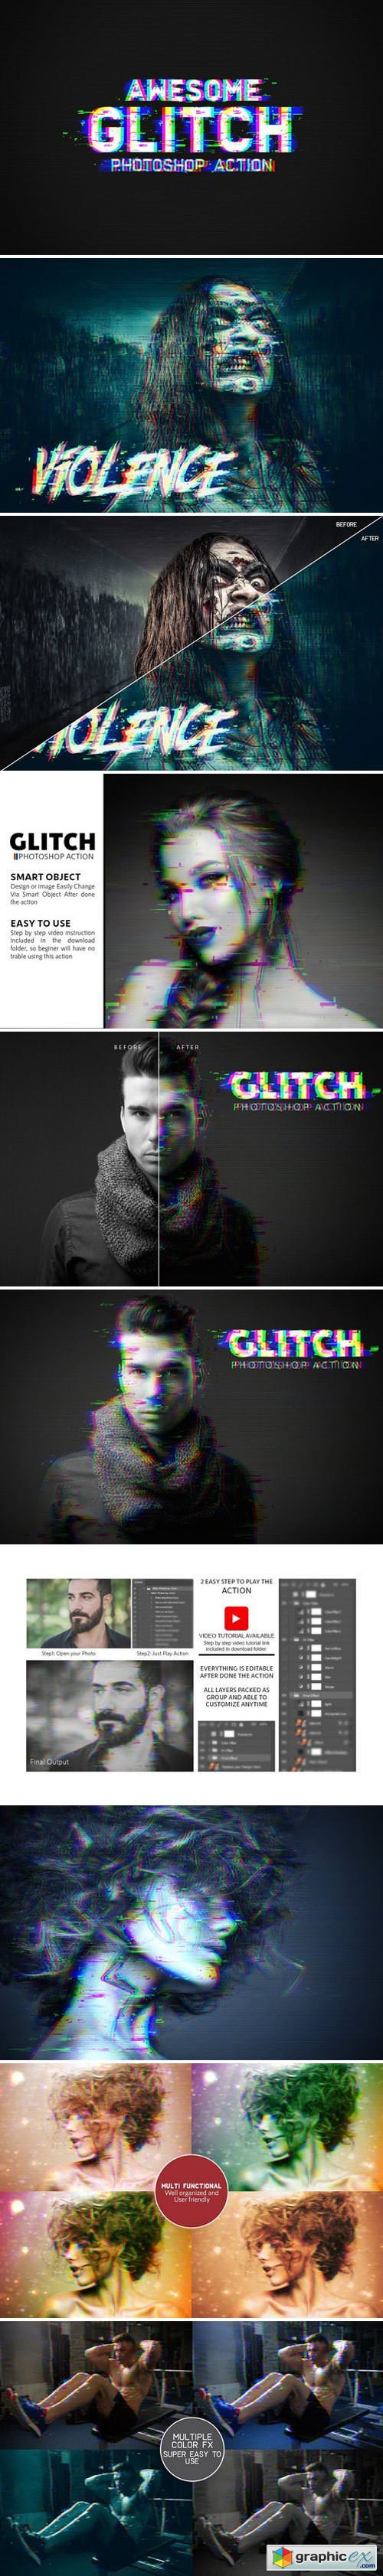 Glitch Photoshop Action 2151322